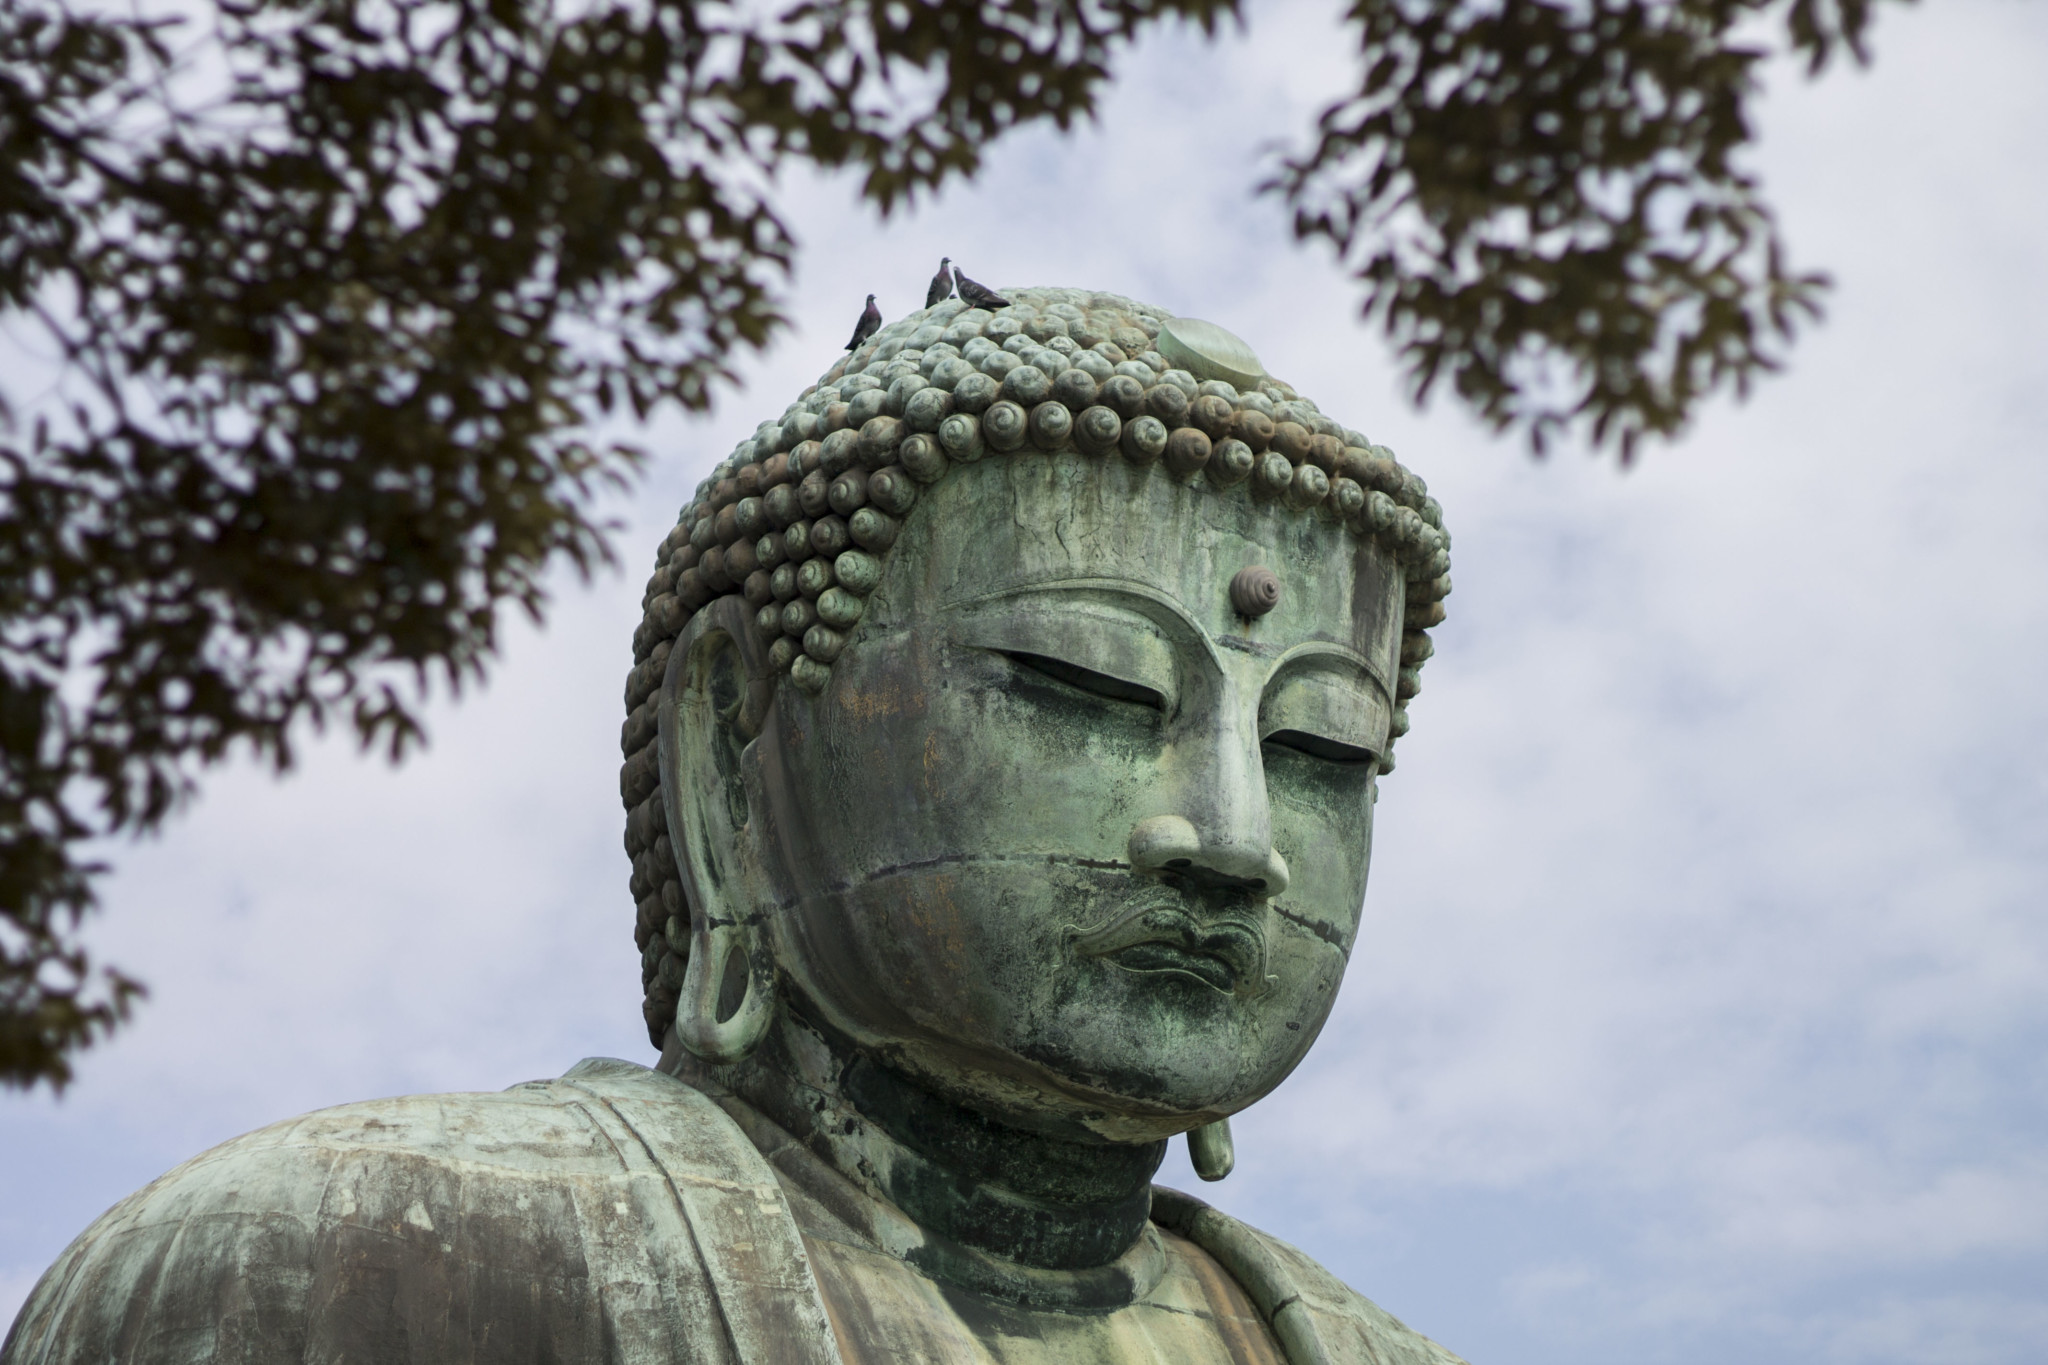 Kamakura and Enoshima day trip from Tokyo